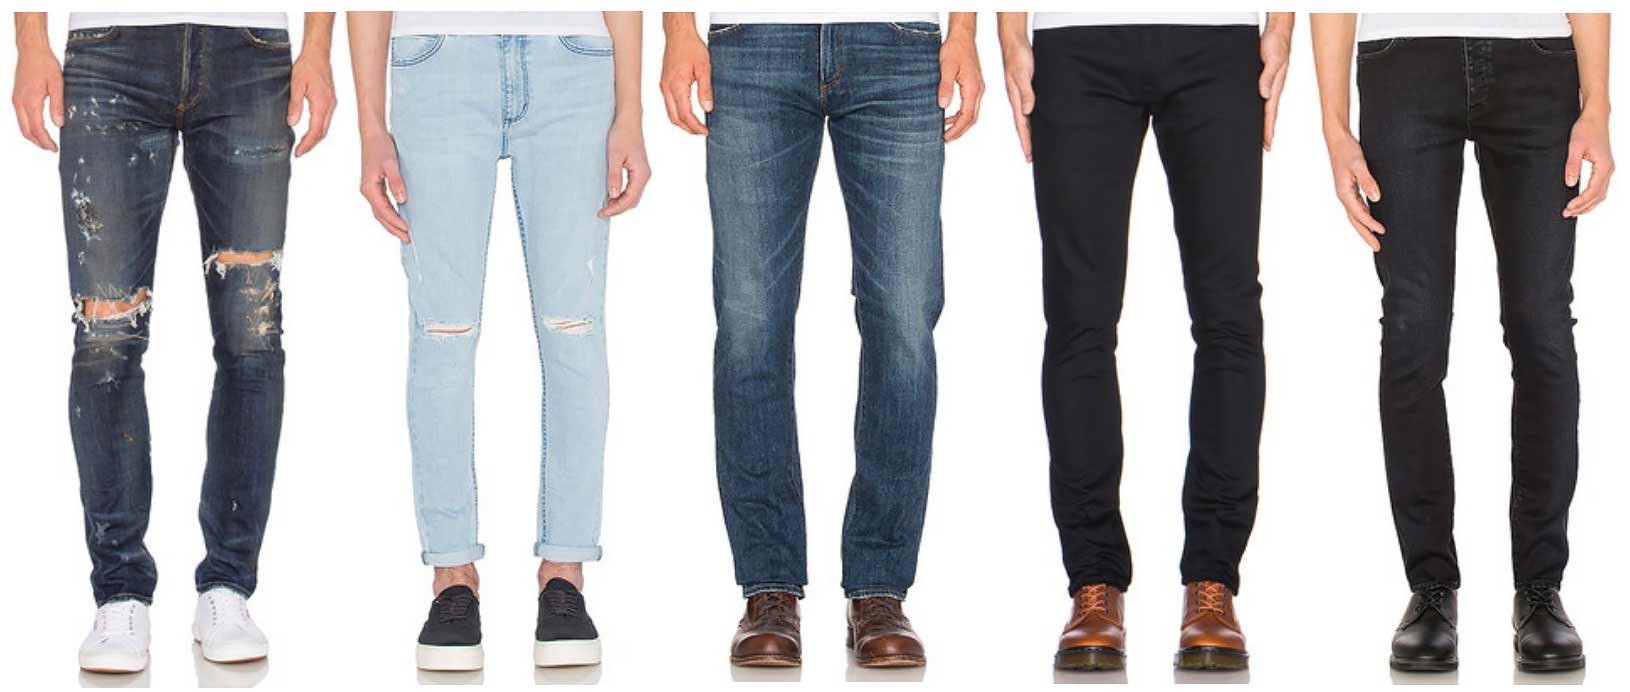 jeans-choices-men-november-2